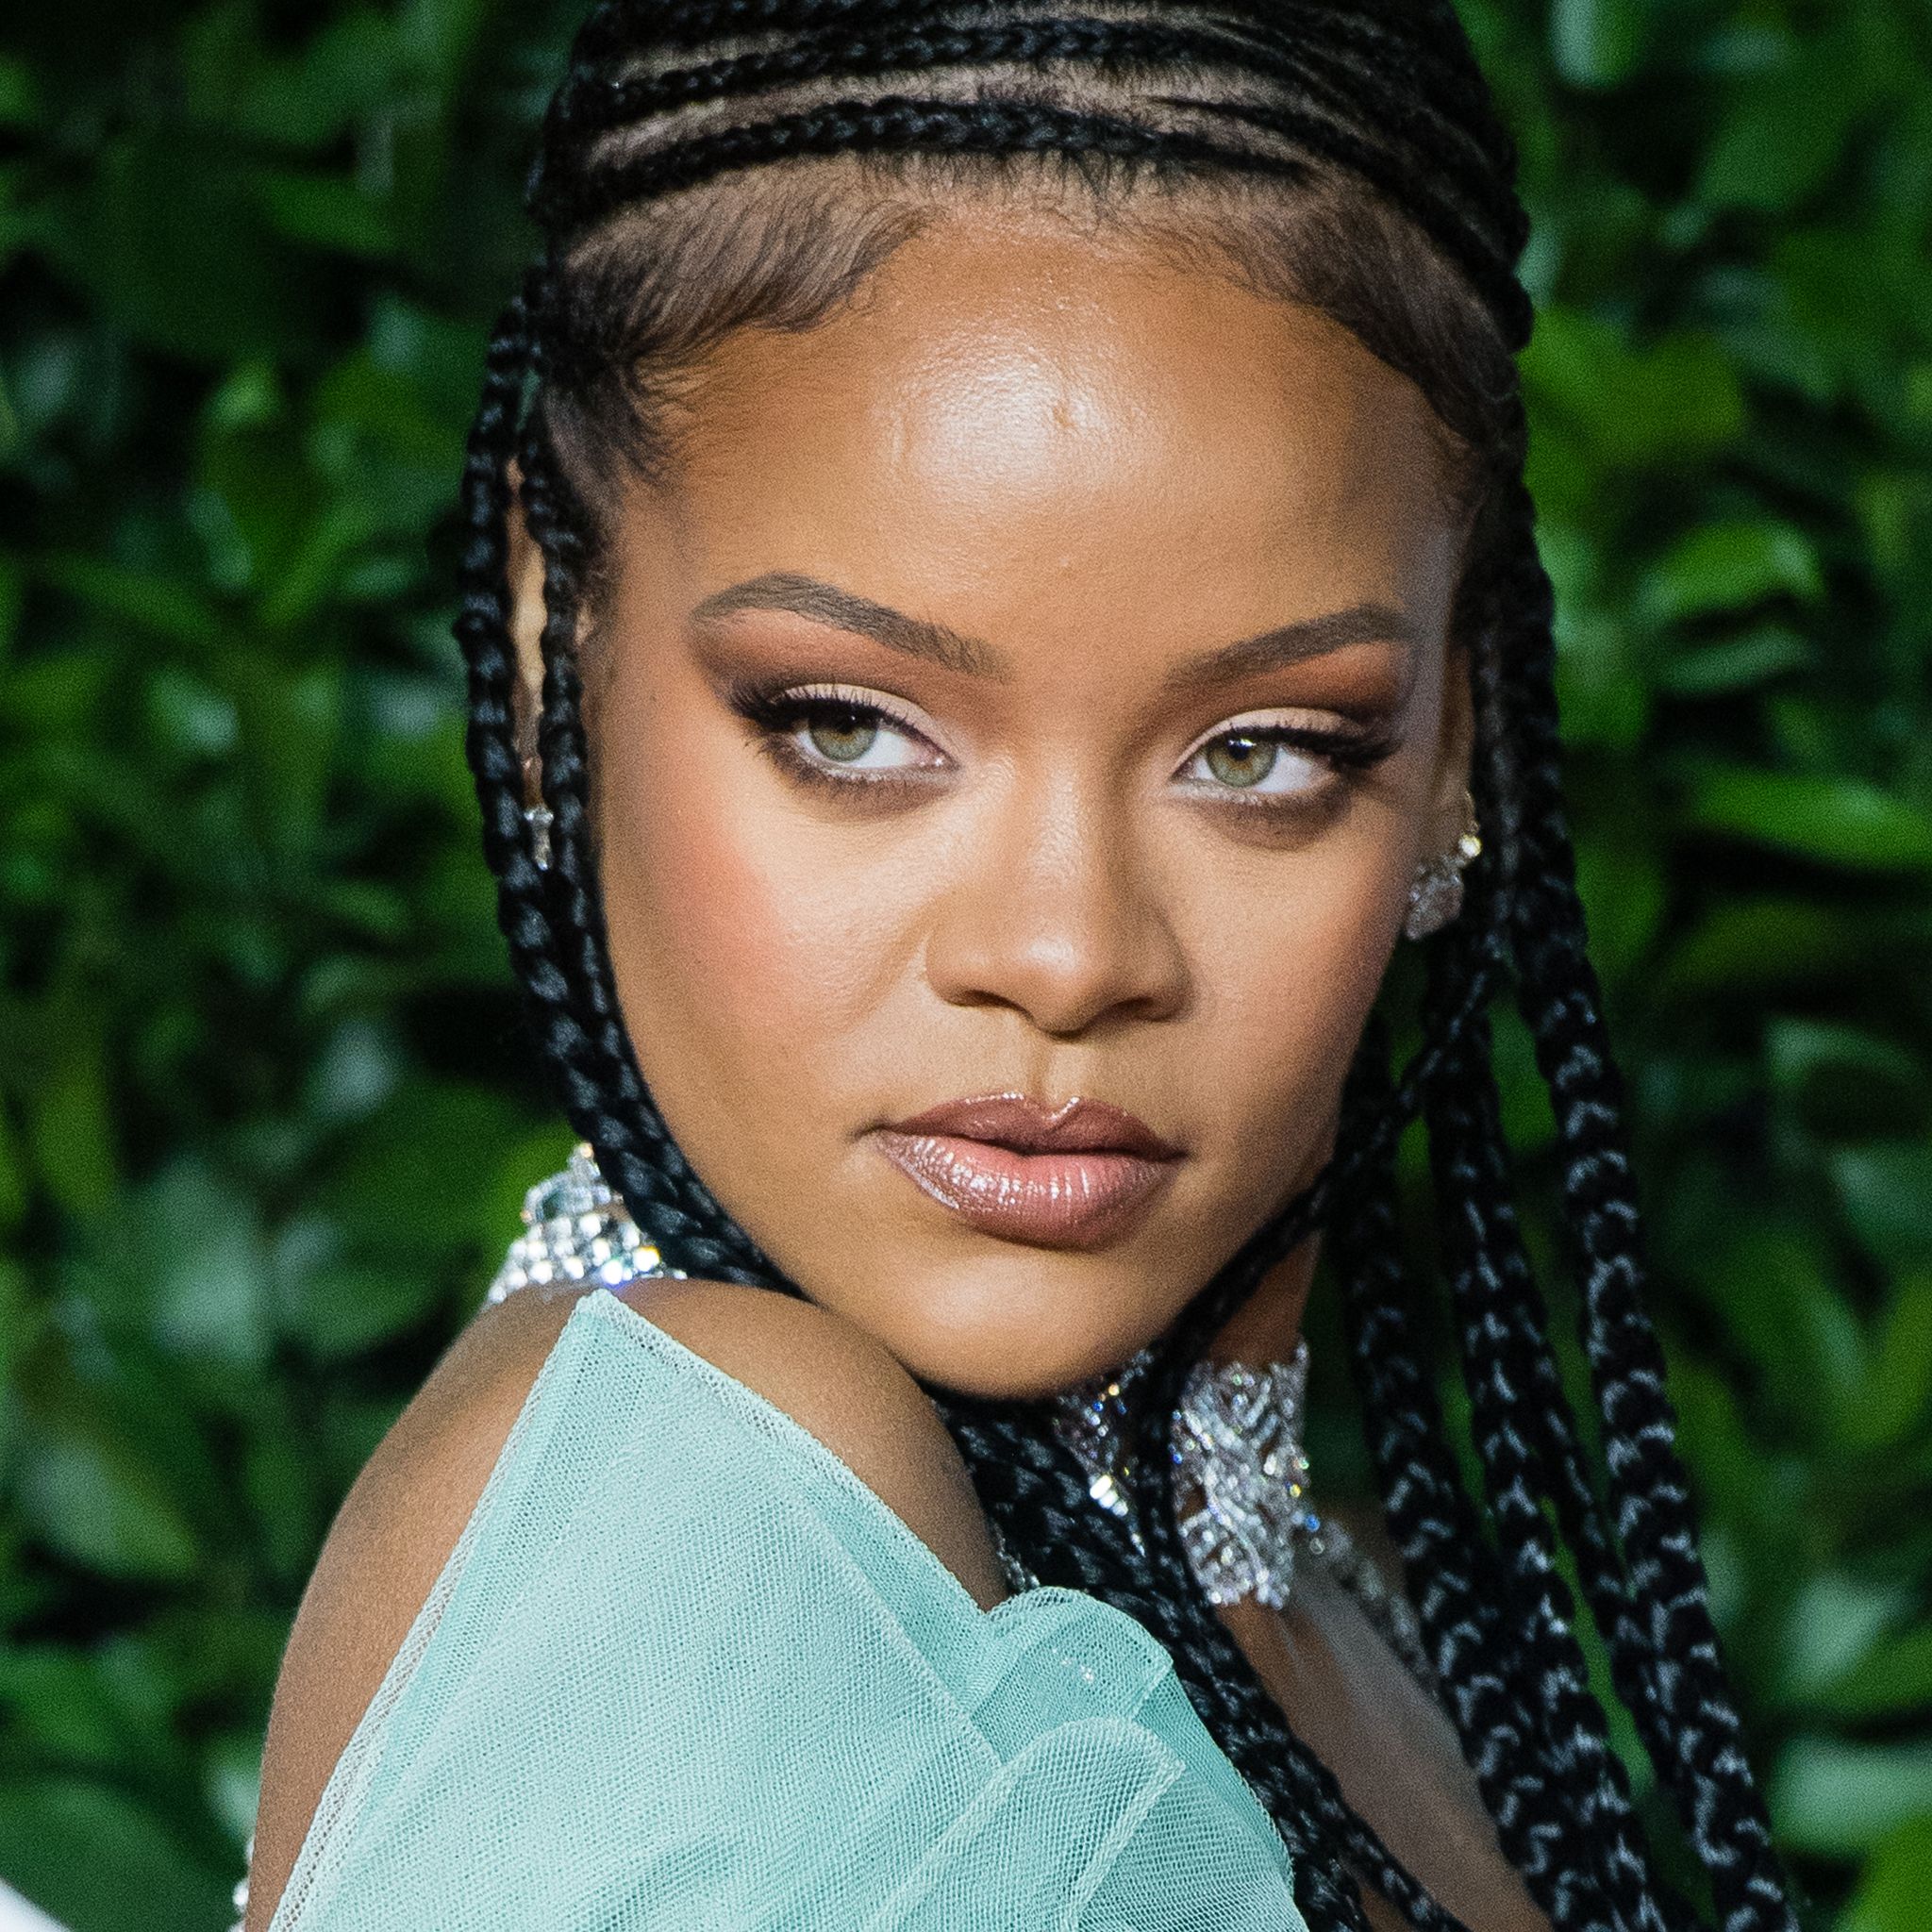 Rihanna to launch Fenty brand Black haircare product line, Rihanna